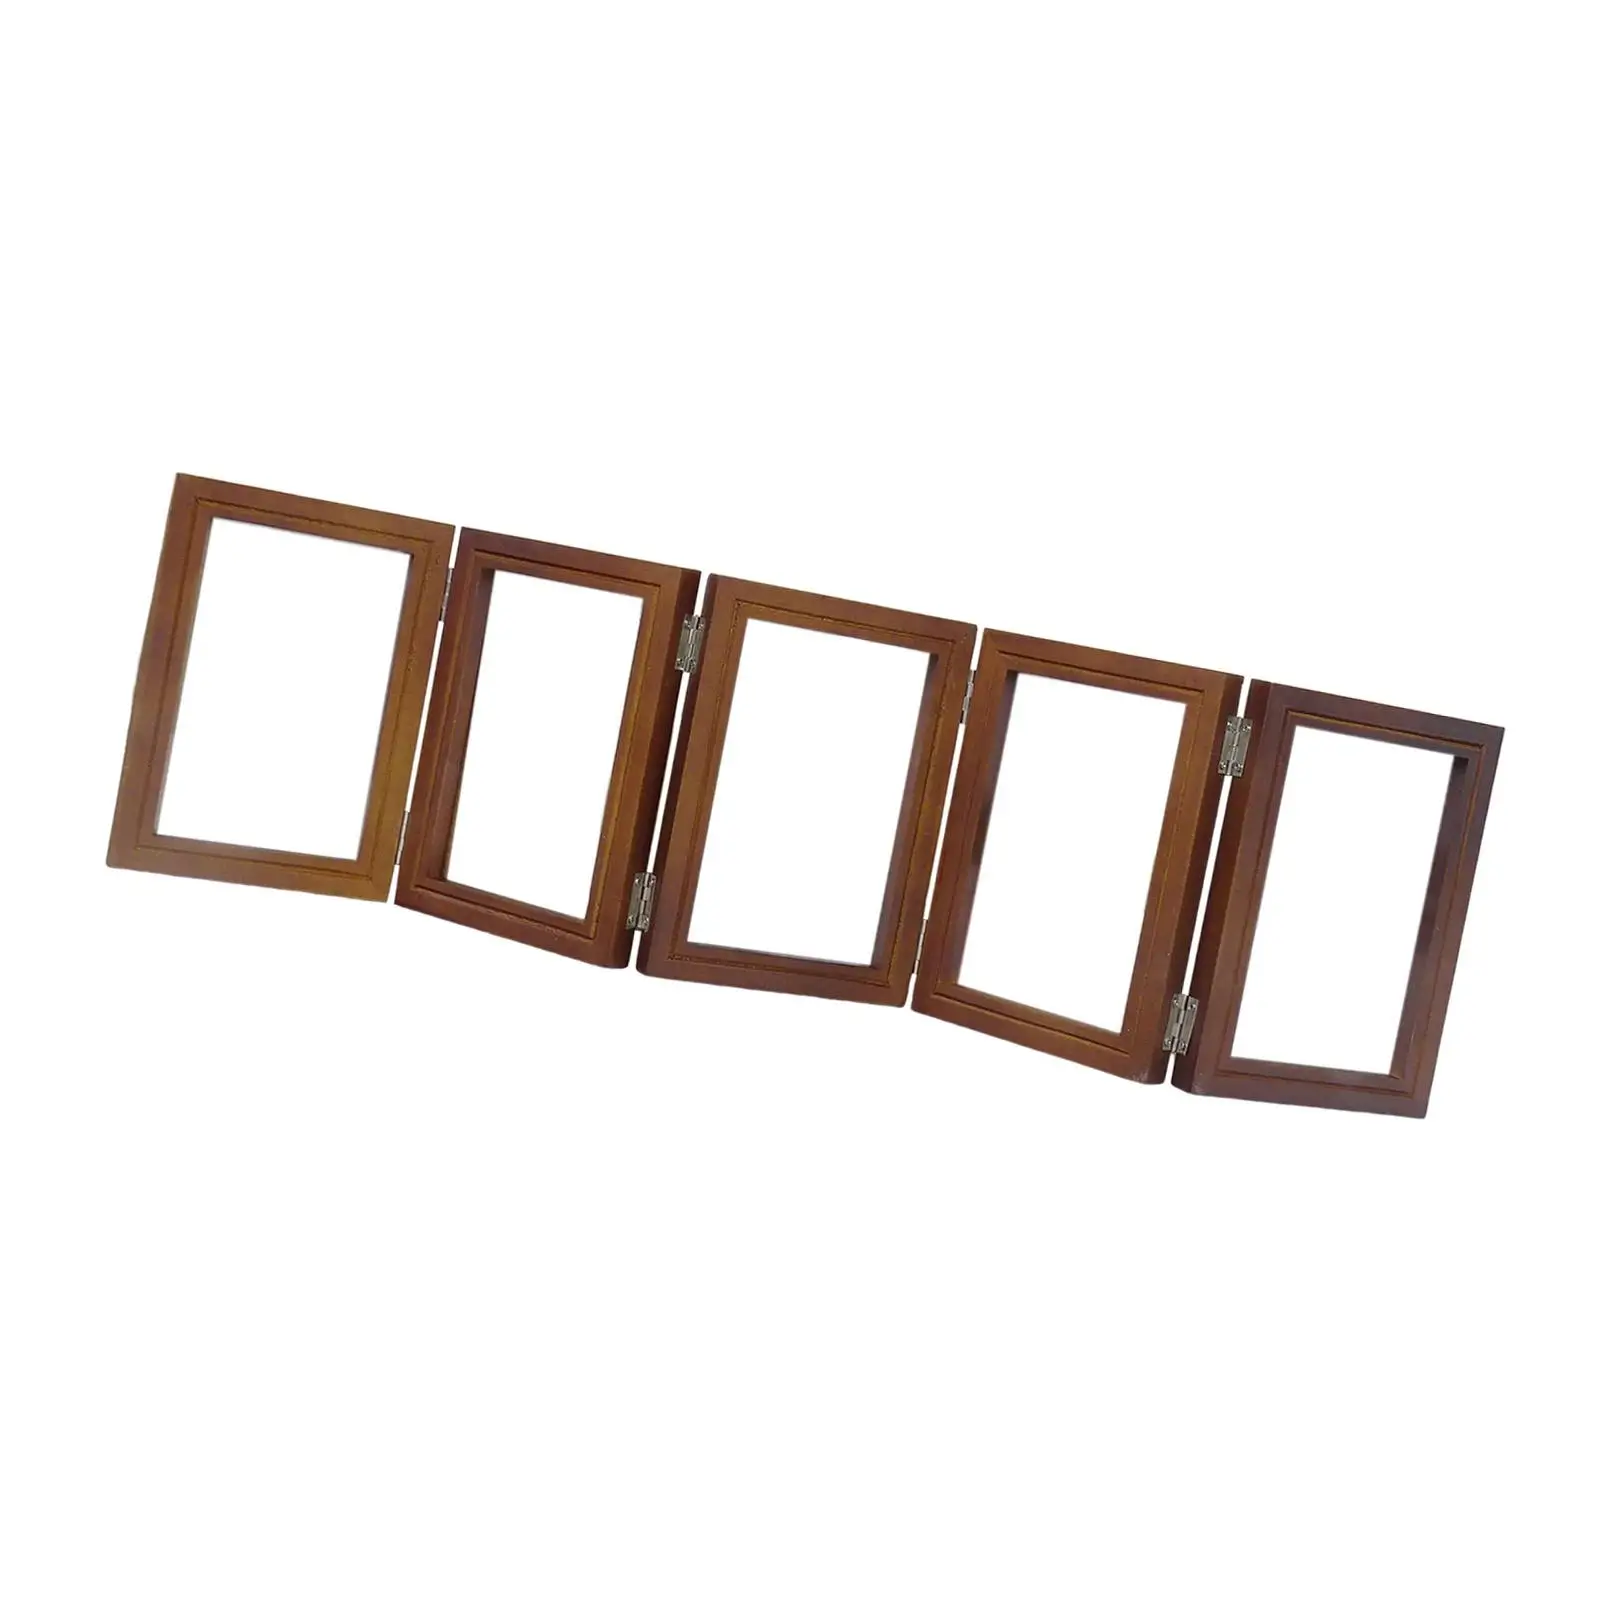 Hinged Picture Frame Desk Lightweight Fashion Wooden Durable Art Foldable Frame for Gift Thanksgiving Dining Room Restaurant